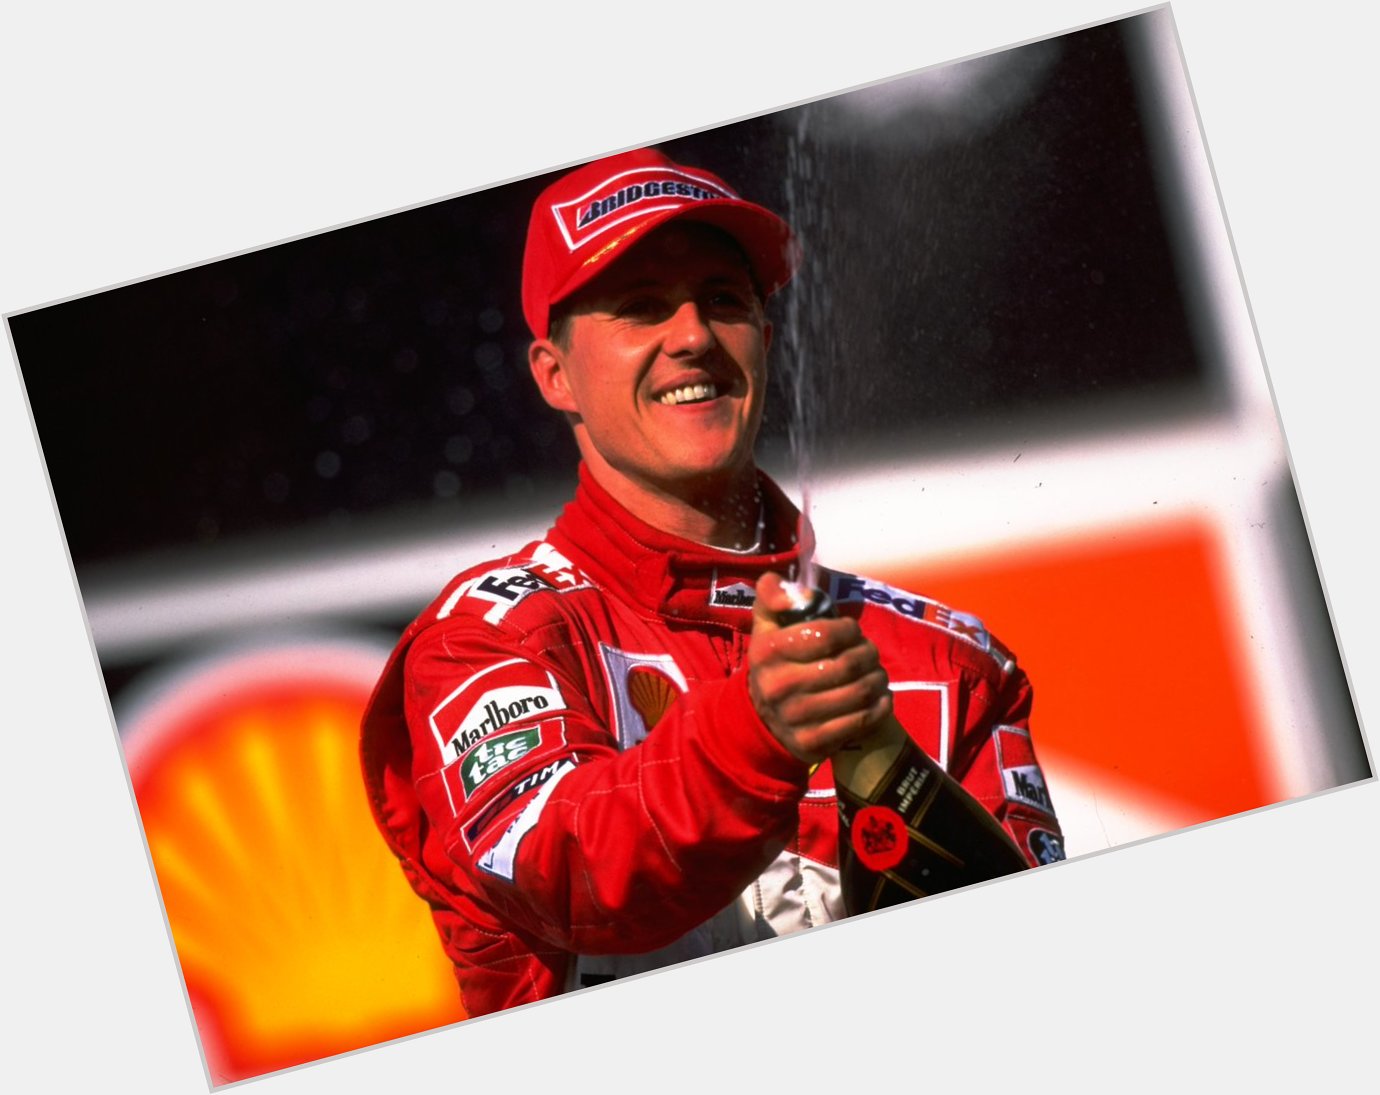 Happy birthday to seven-time world champion Michael Schumacher.

Keep fighting, Michael. 